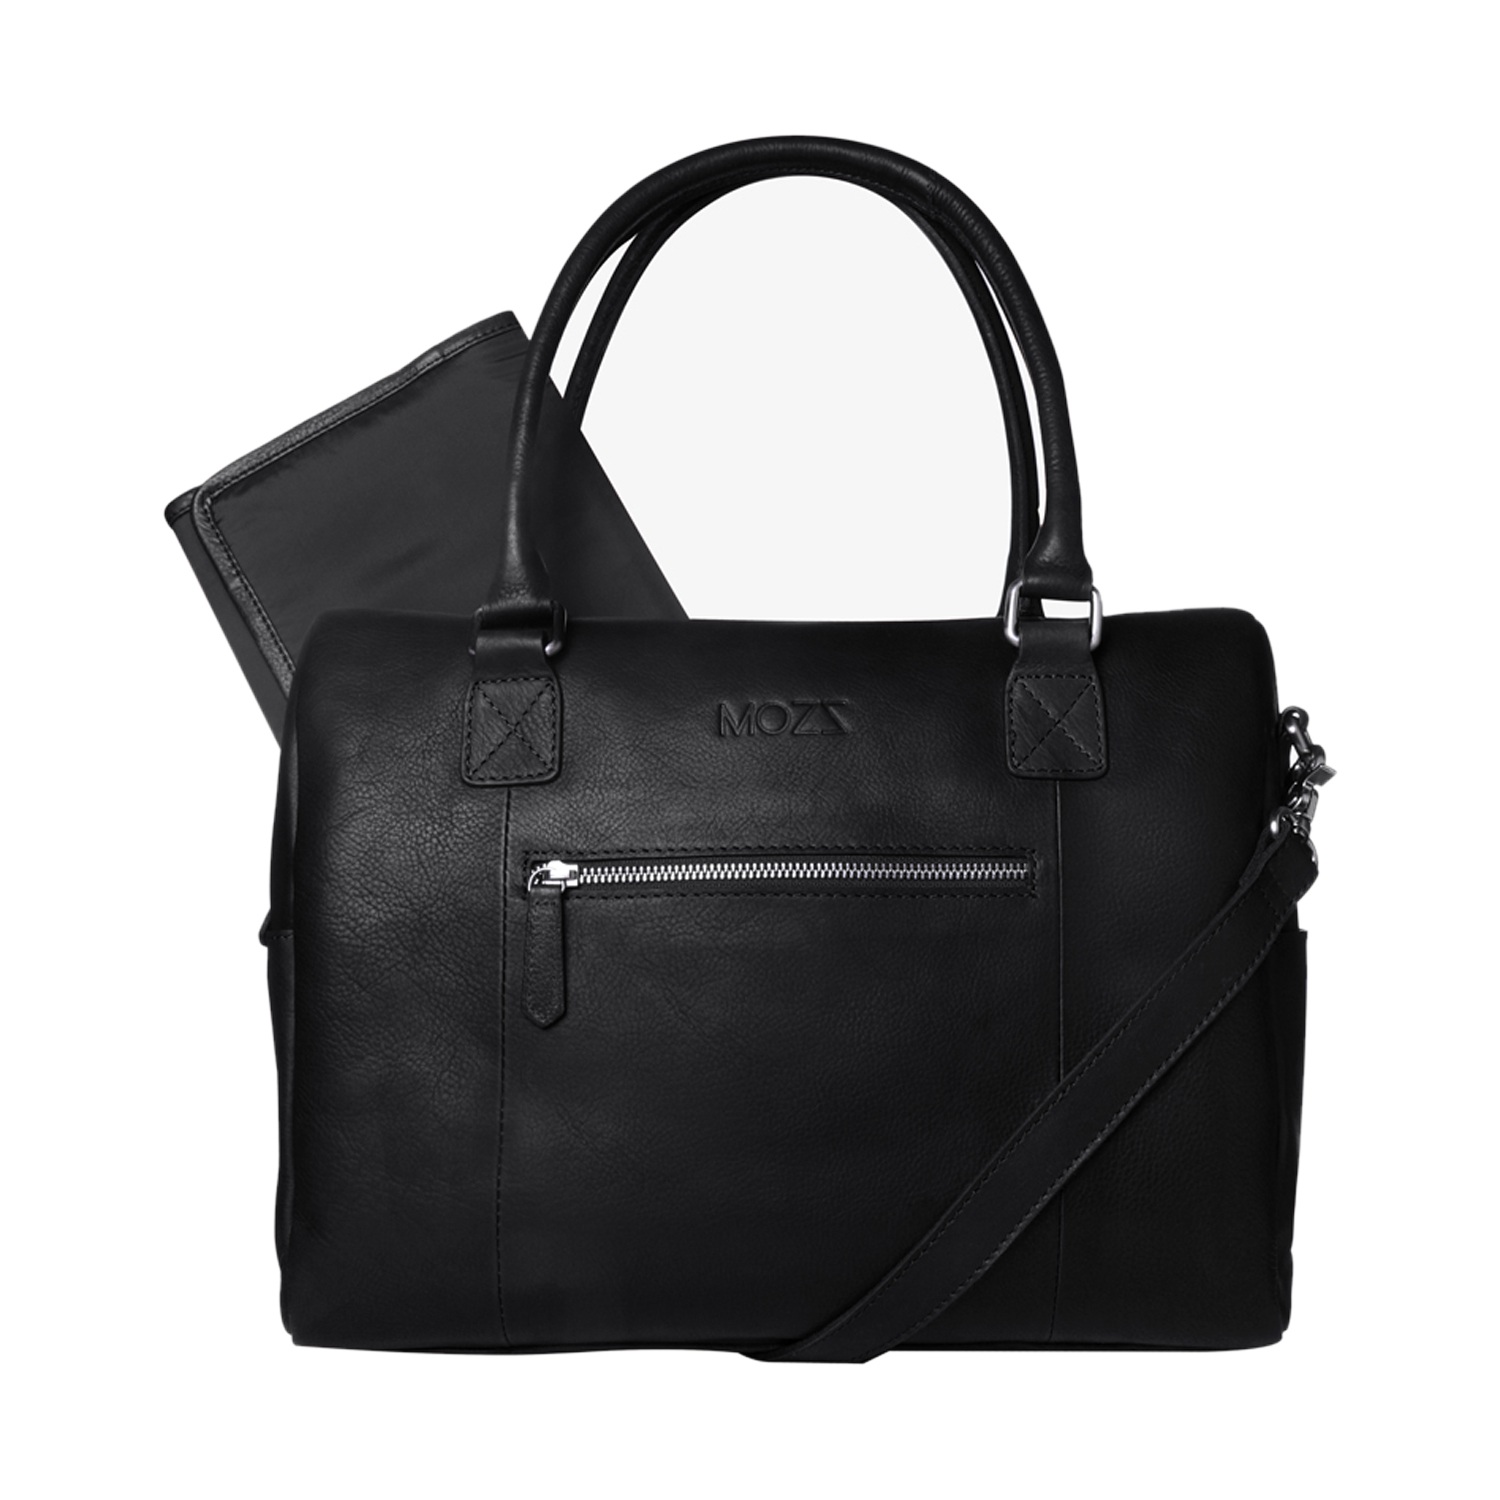 Mozz Bags Easy Elegant Luiertas Black